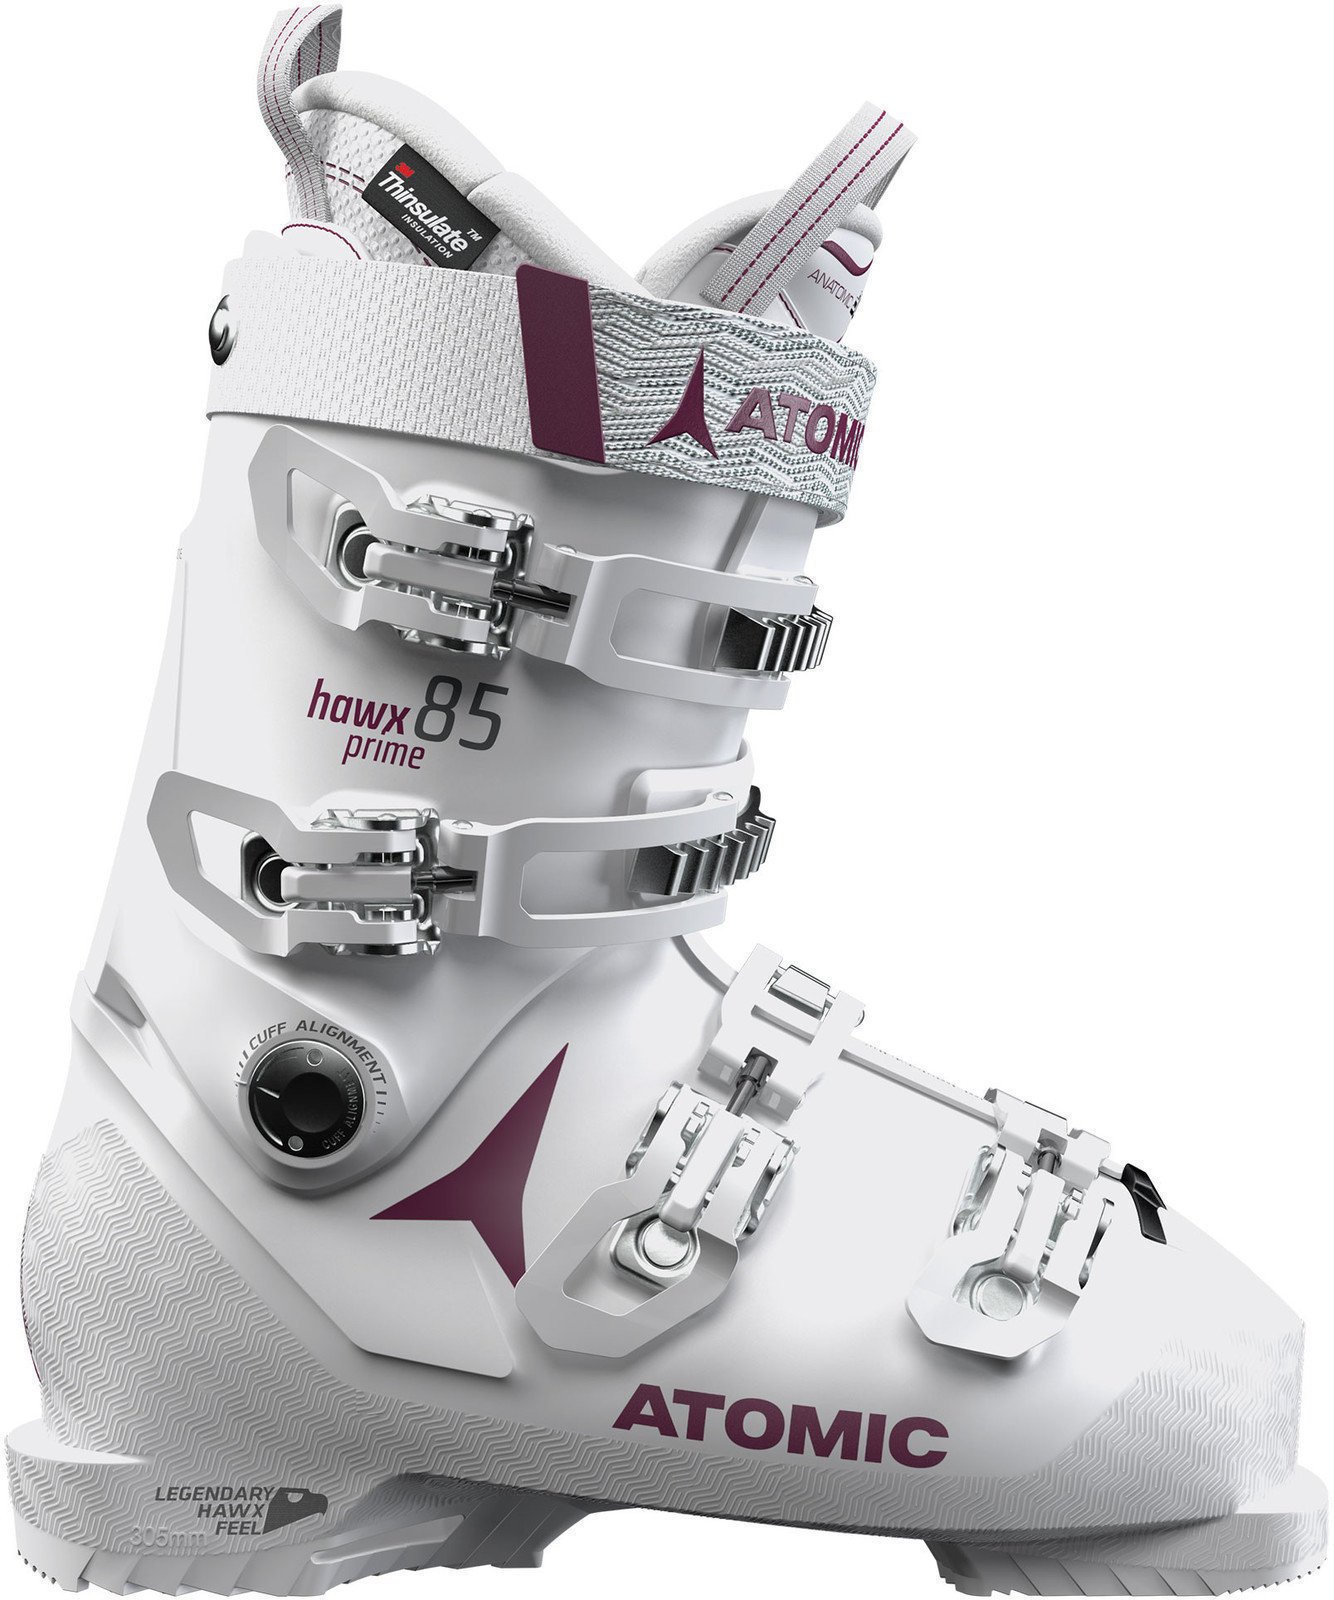 Cipele za alpsko skijanje Atomic Hawx Prime 85 W White/Purple 25-25.5 18/19